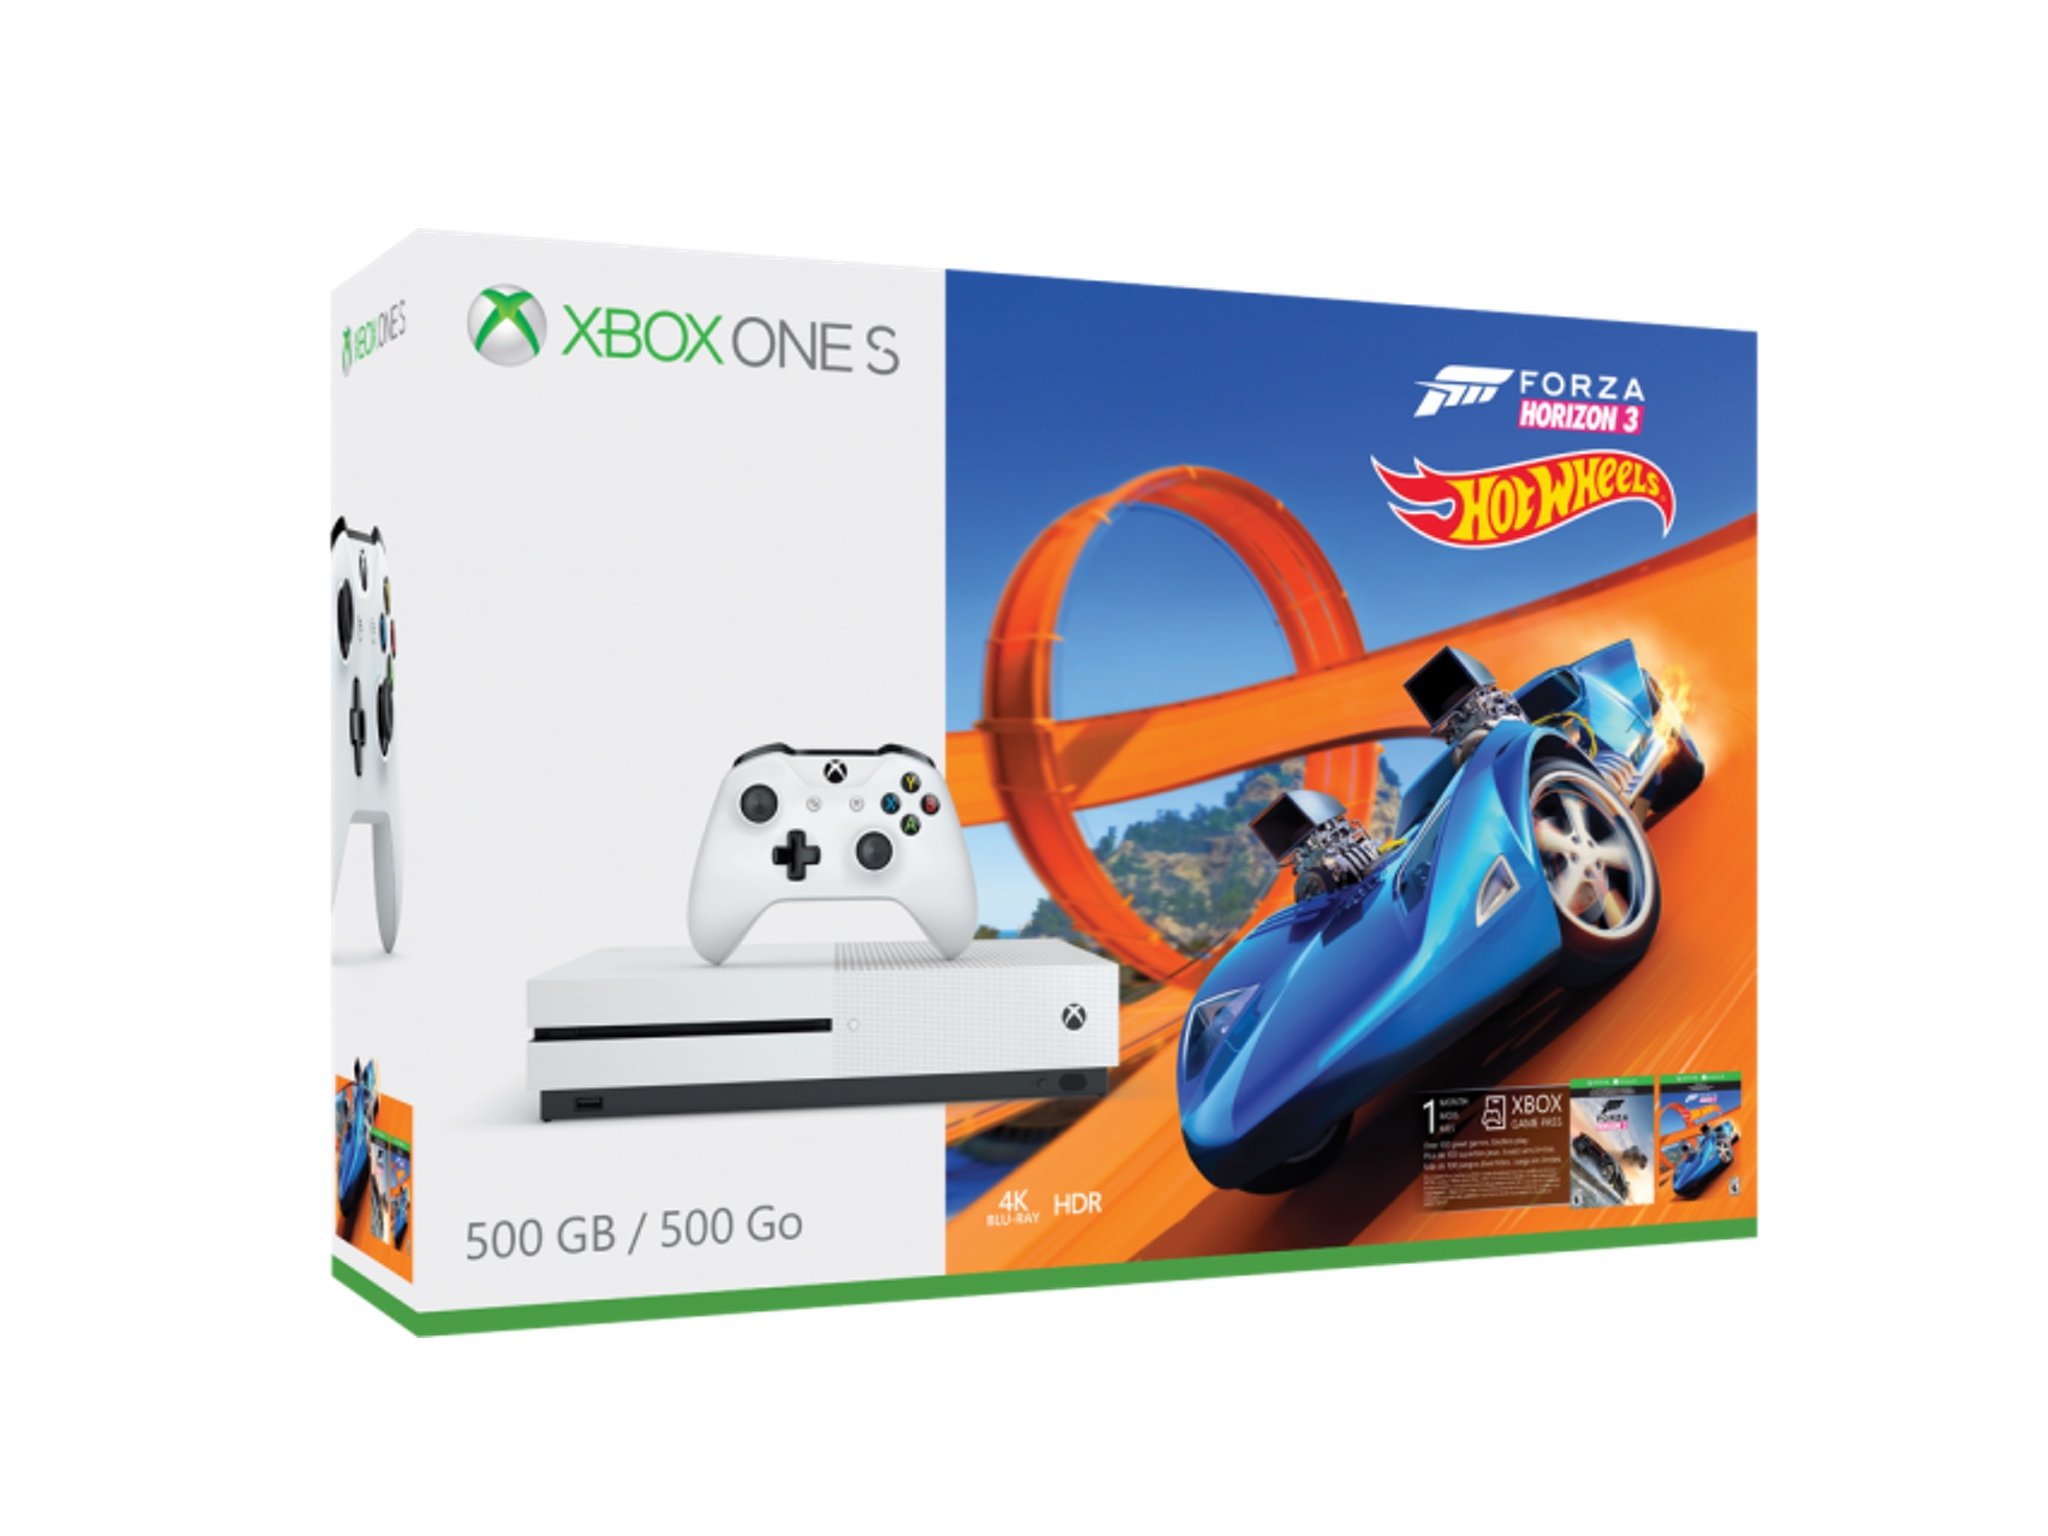 Microsoft launches new Xbox One S Forza Horizon 3 Hot Wheels bundle